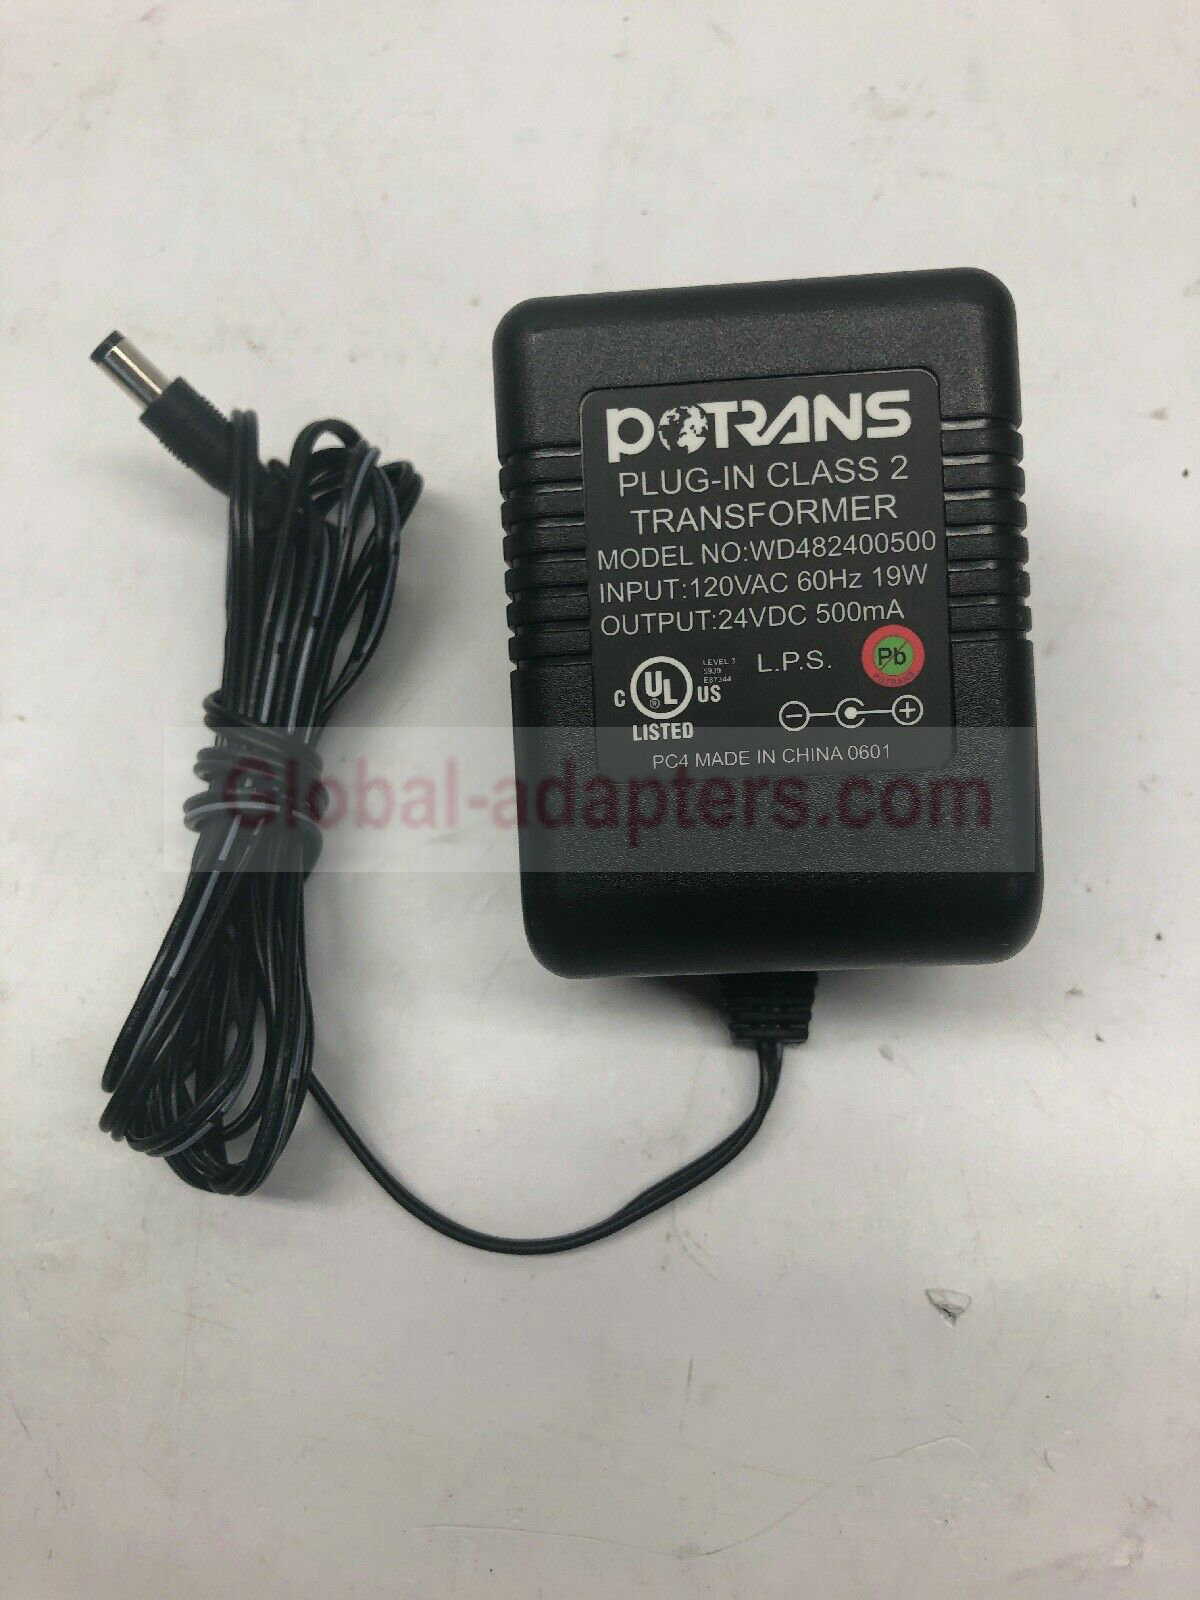 New 24V 500mA Potrans WD482400500 Class 2 Transformer Power Supply Ac Adapter - Click Image to Close